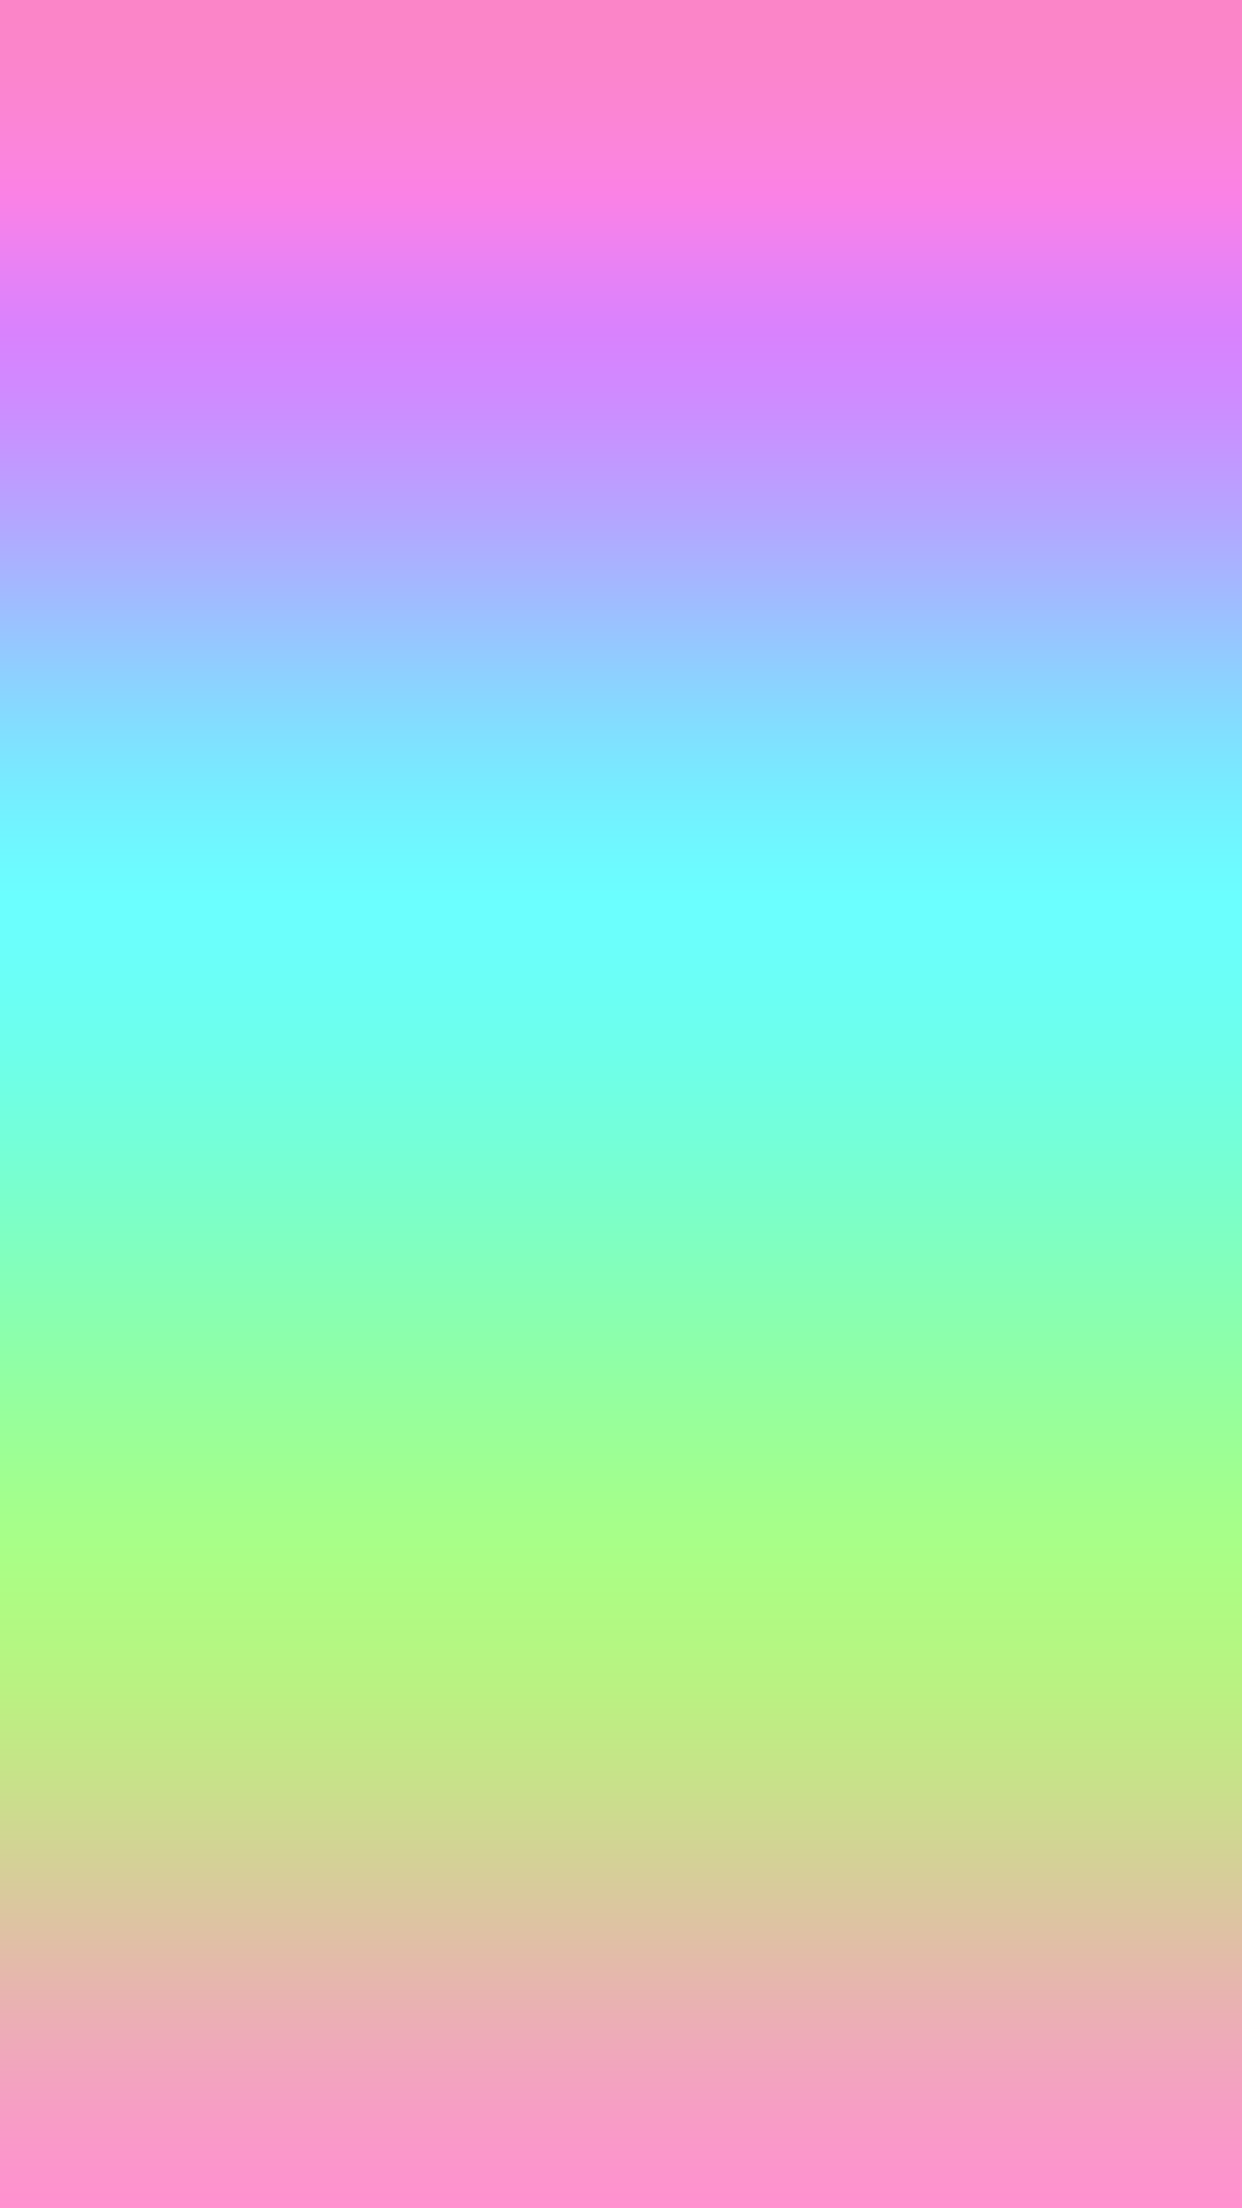 Gradient ombre pink blue purple green wallpaper hd iPhone